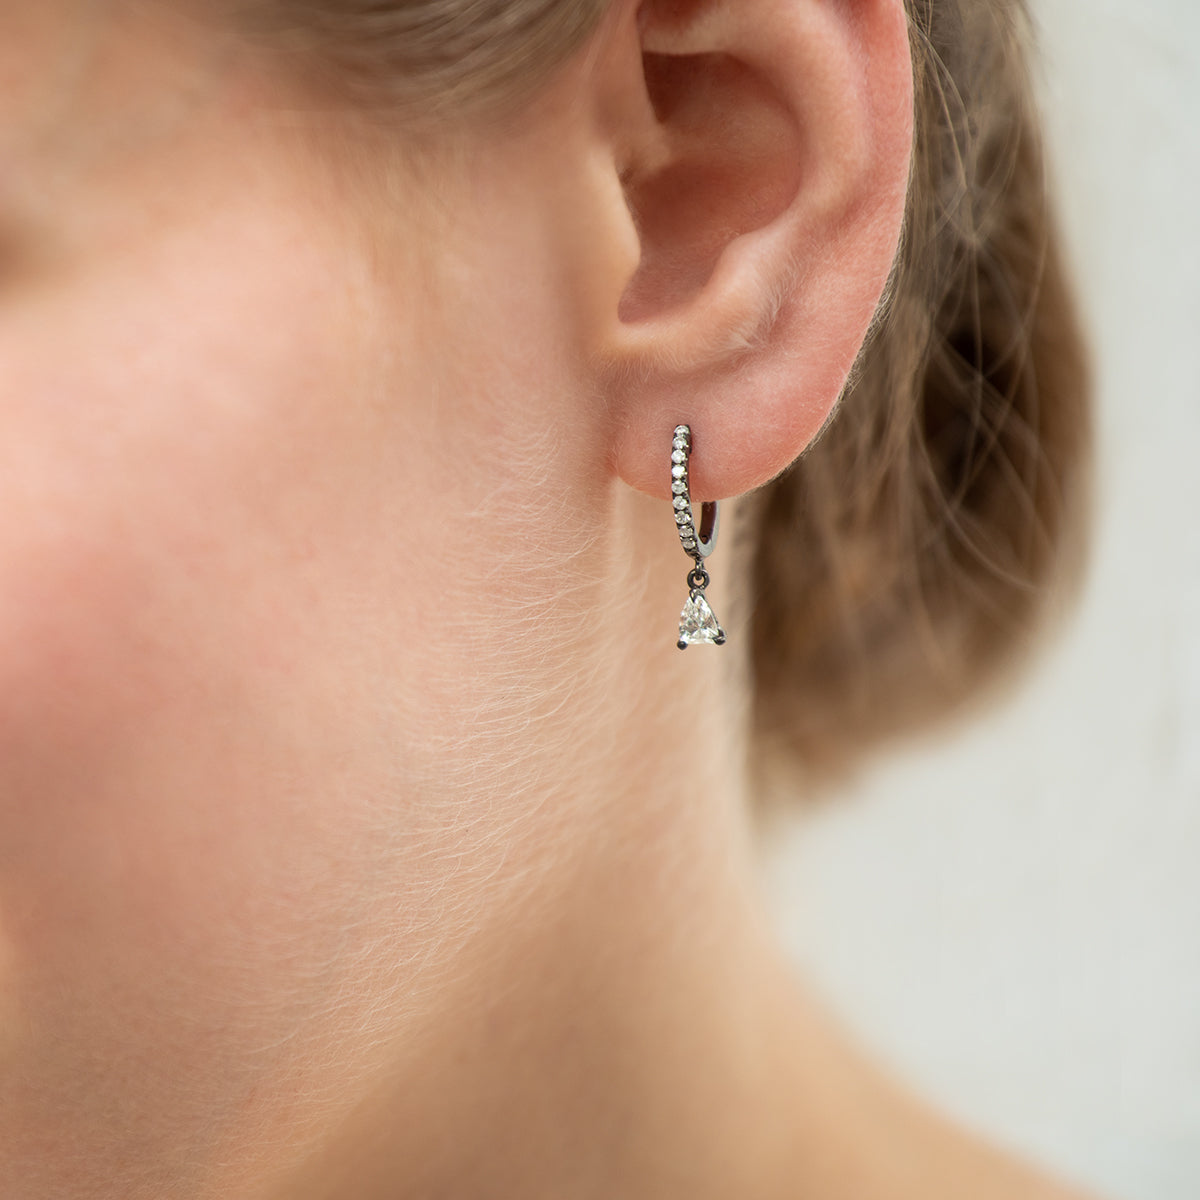  arrowhead diamond earrings (1.05ct)